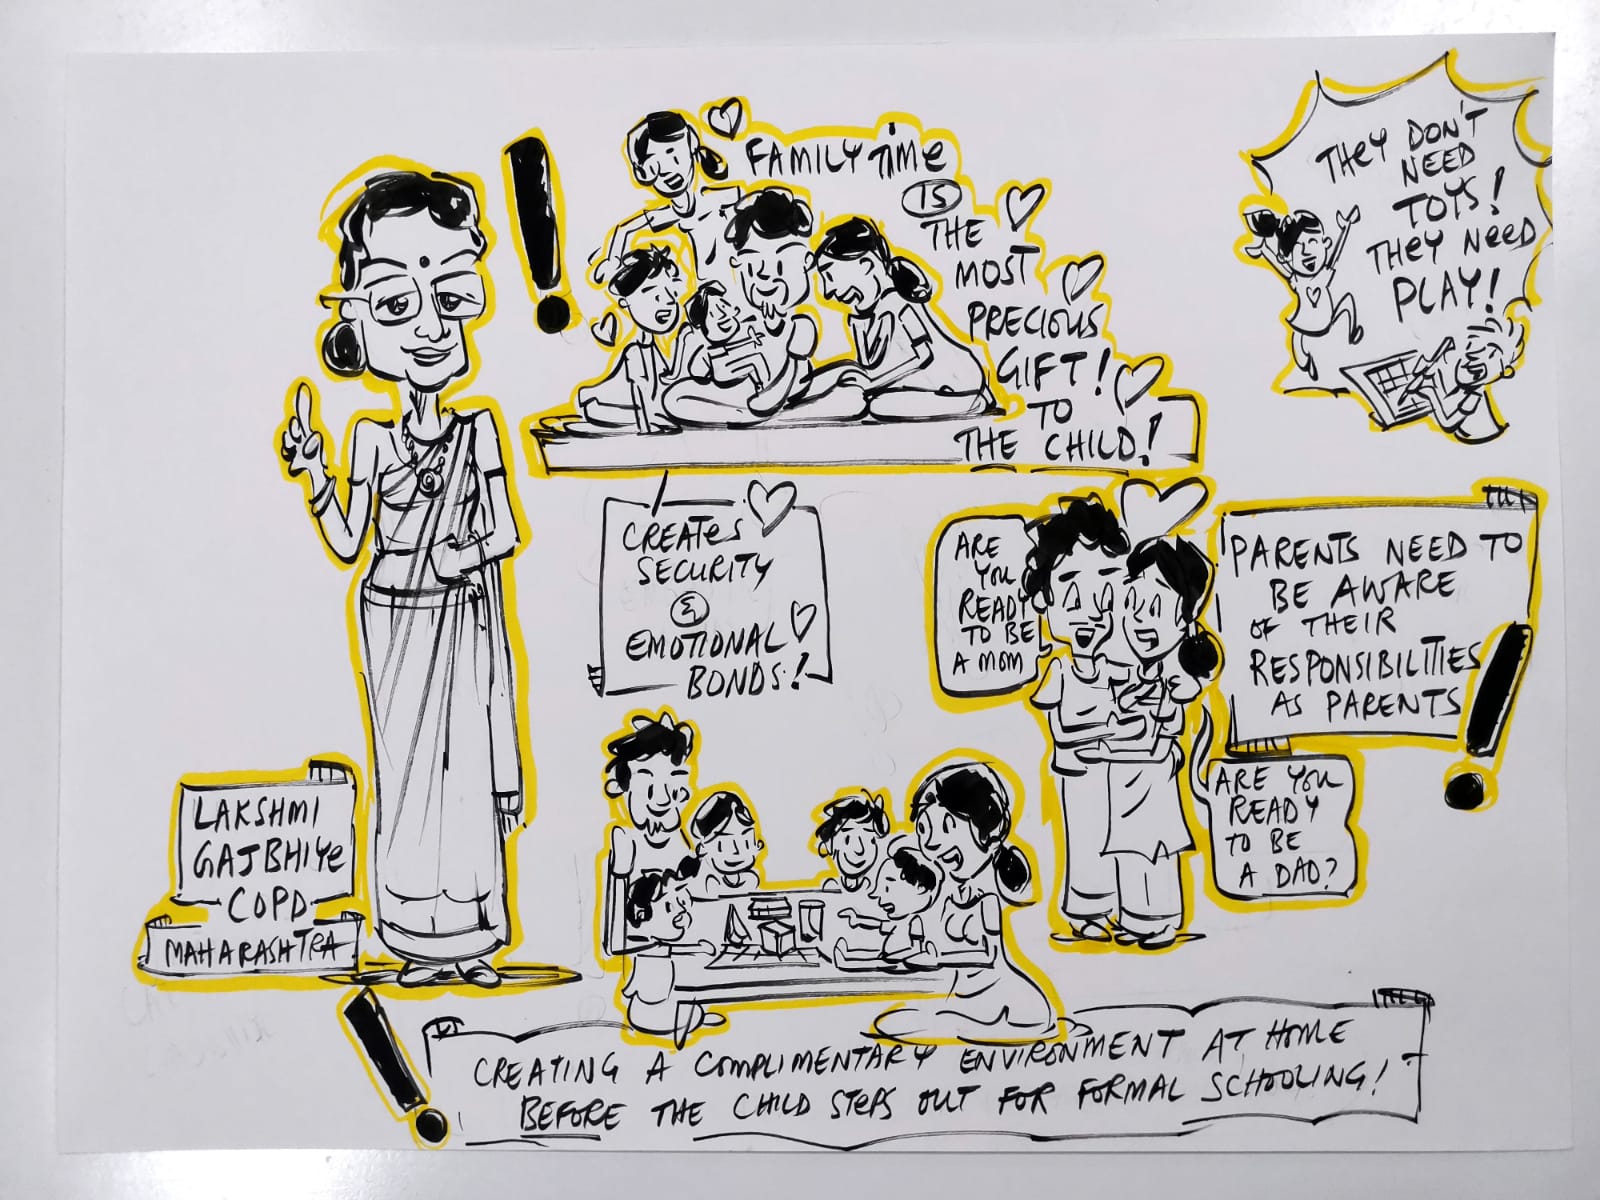 Lakshmi Gajbhiya's Insights at Childhood Workshop